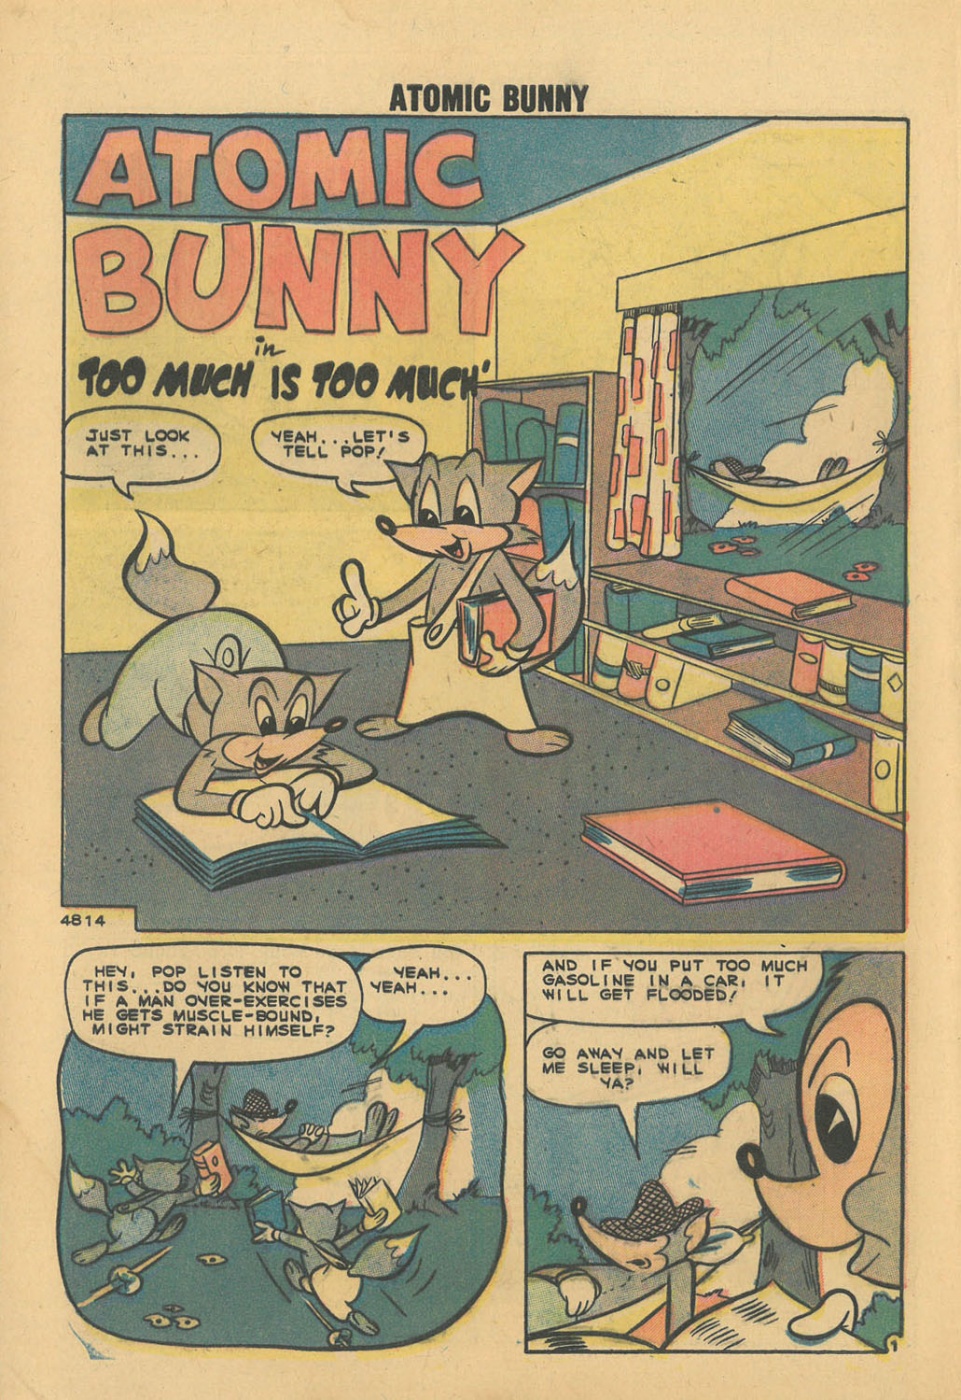 Atomic-Bunny-Comic-Strips (c) (27)